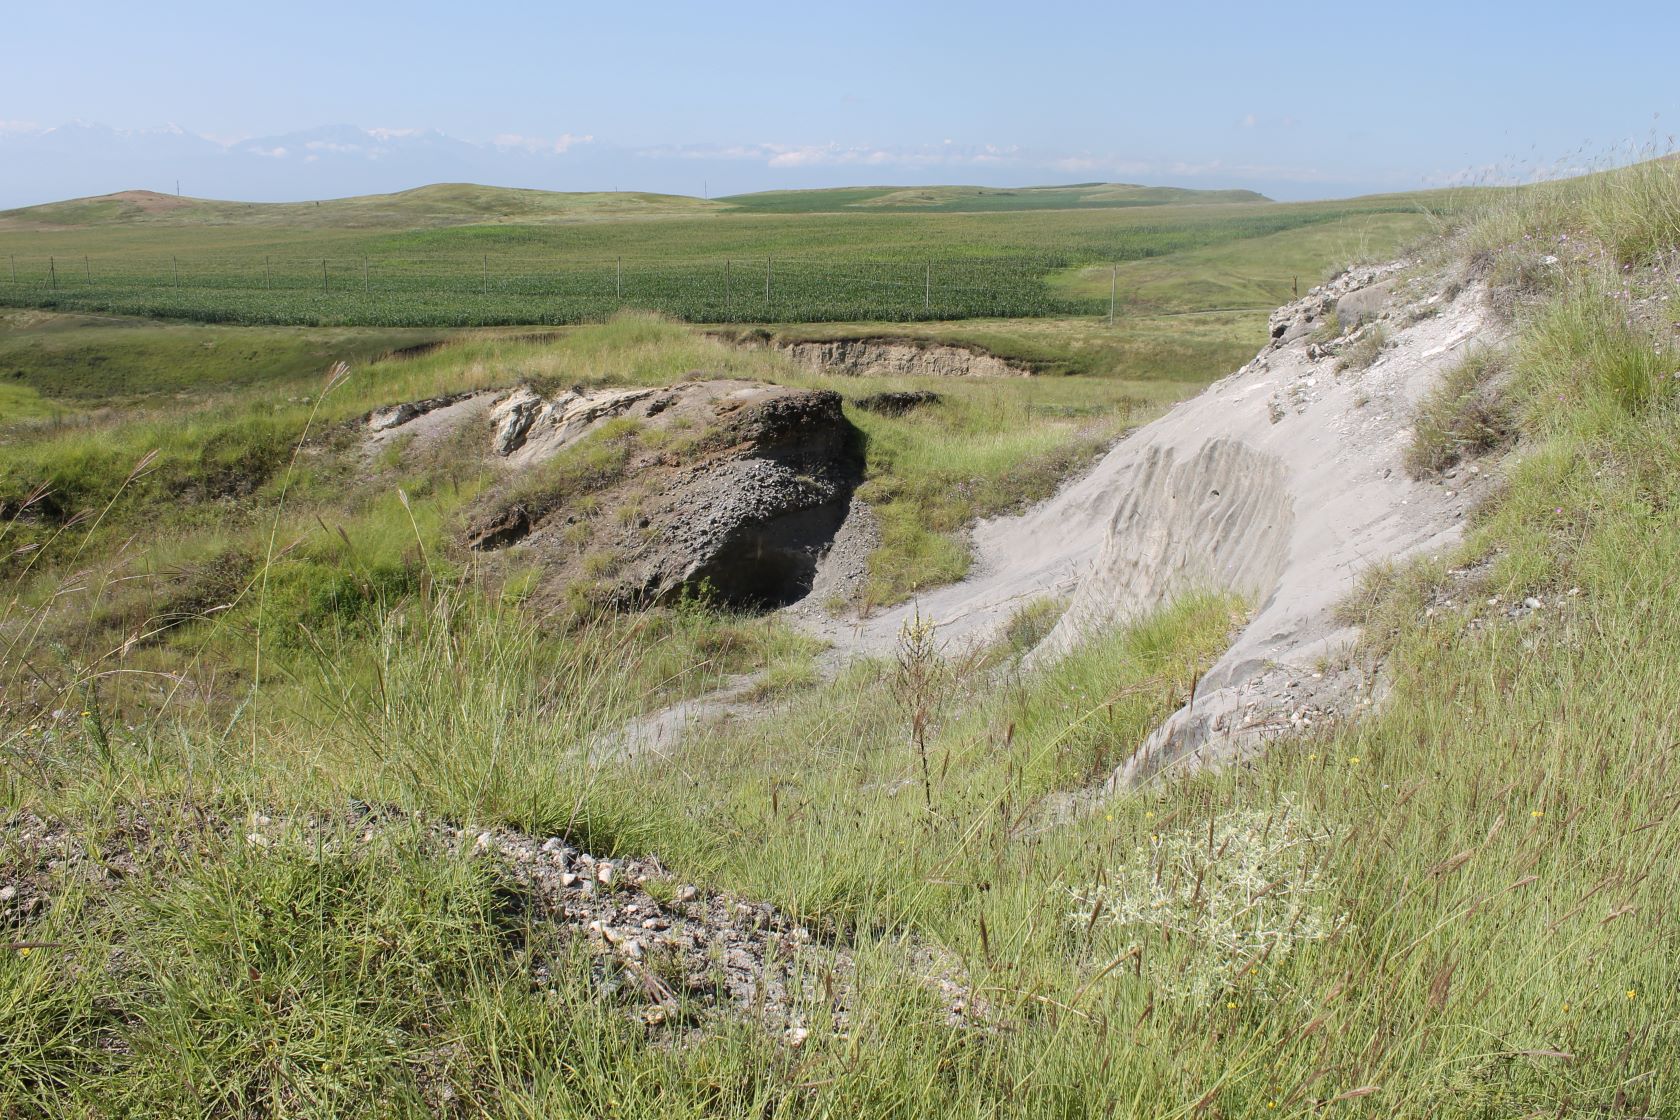 Заманкул, image of landscape/habitat.